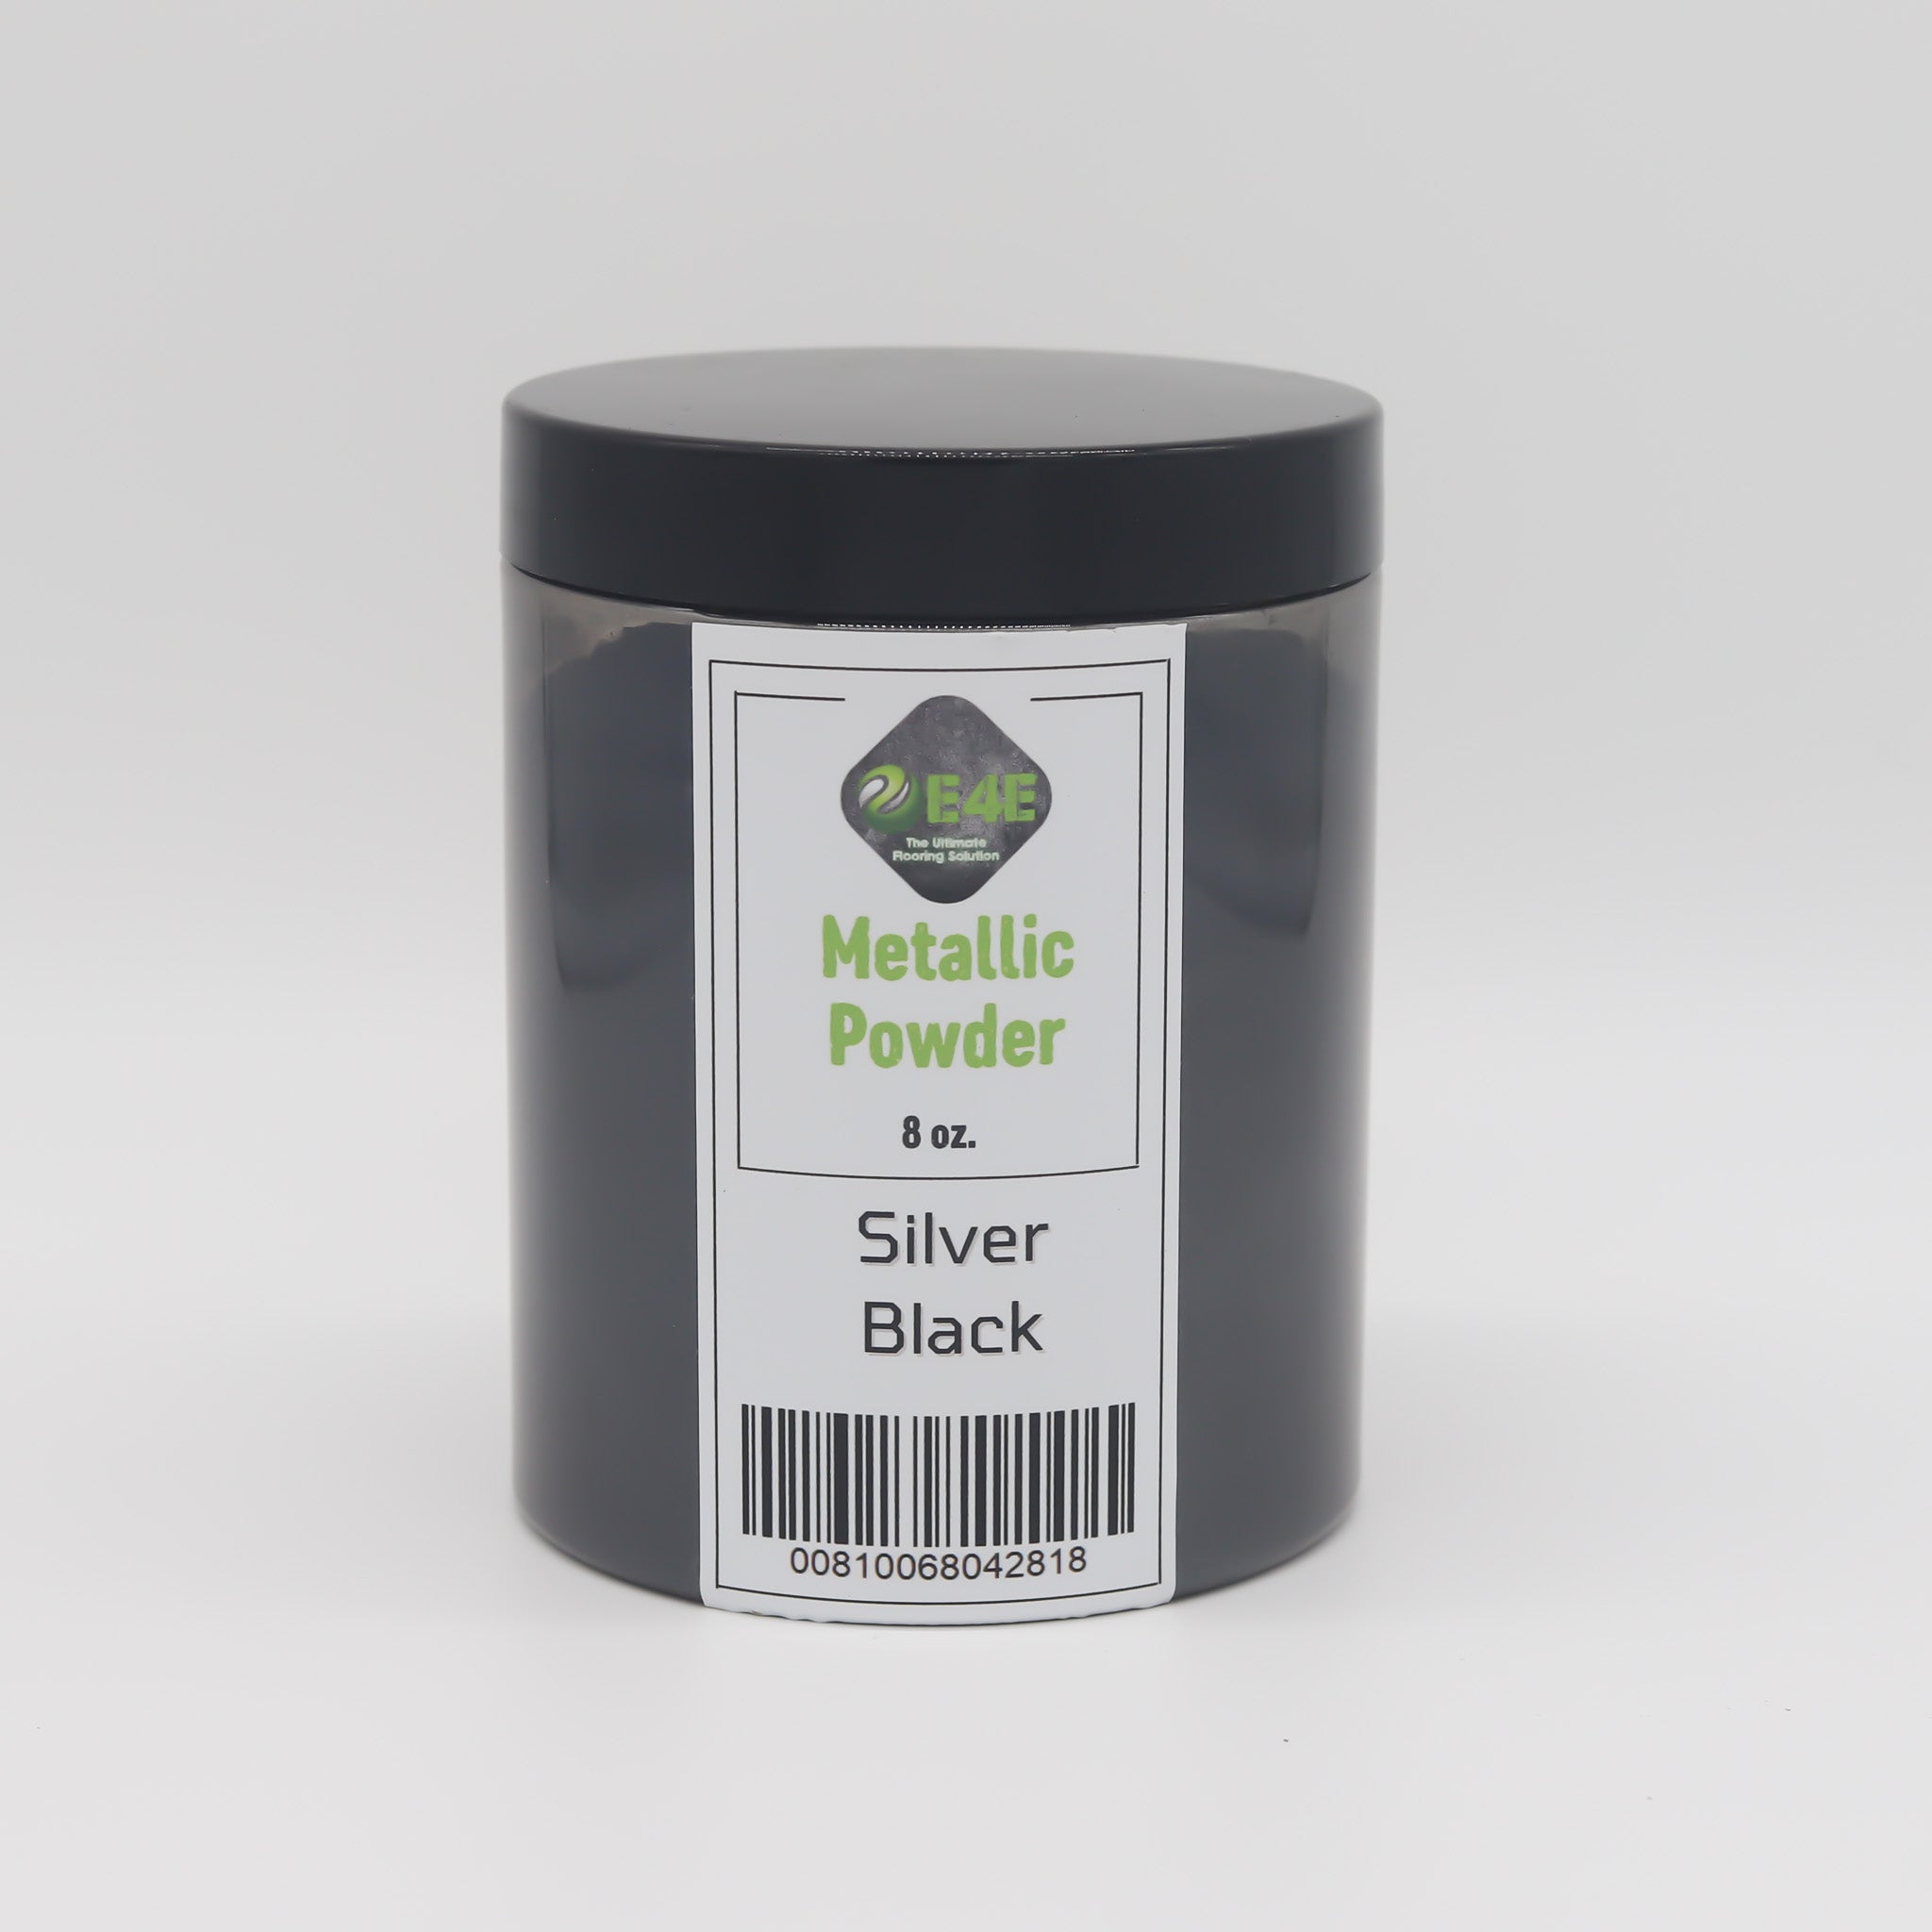 E4E Metallic Powder - Silver Black